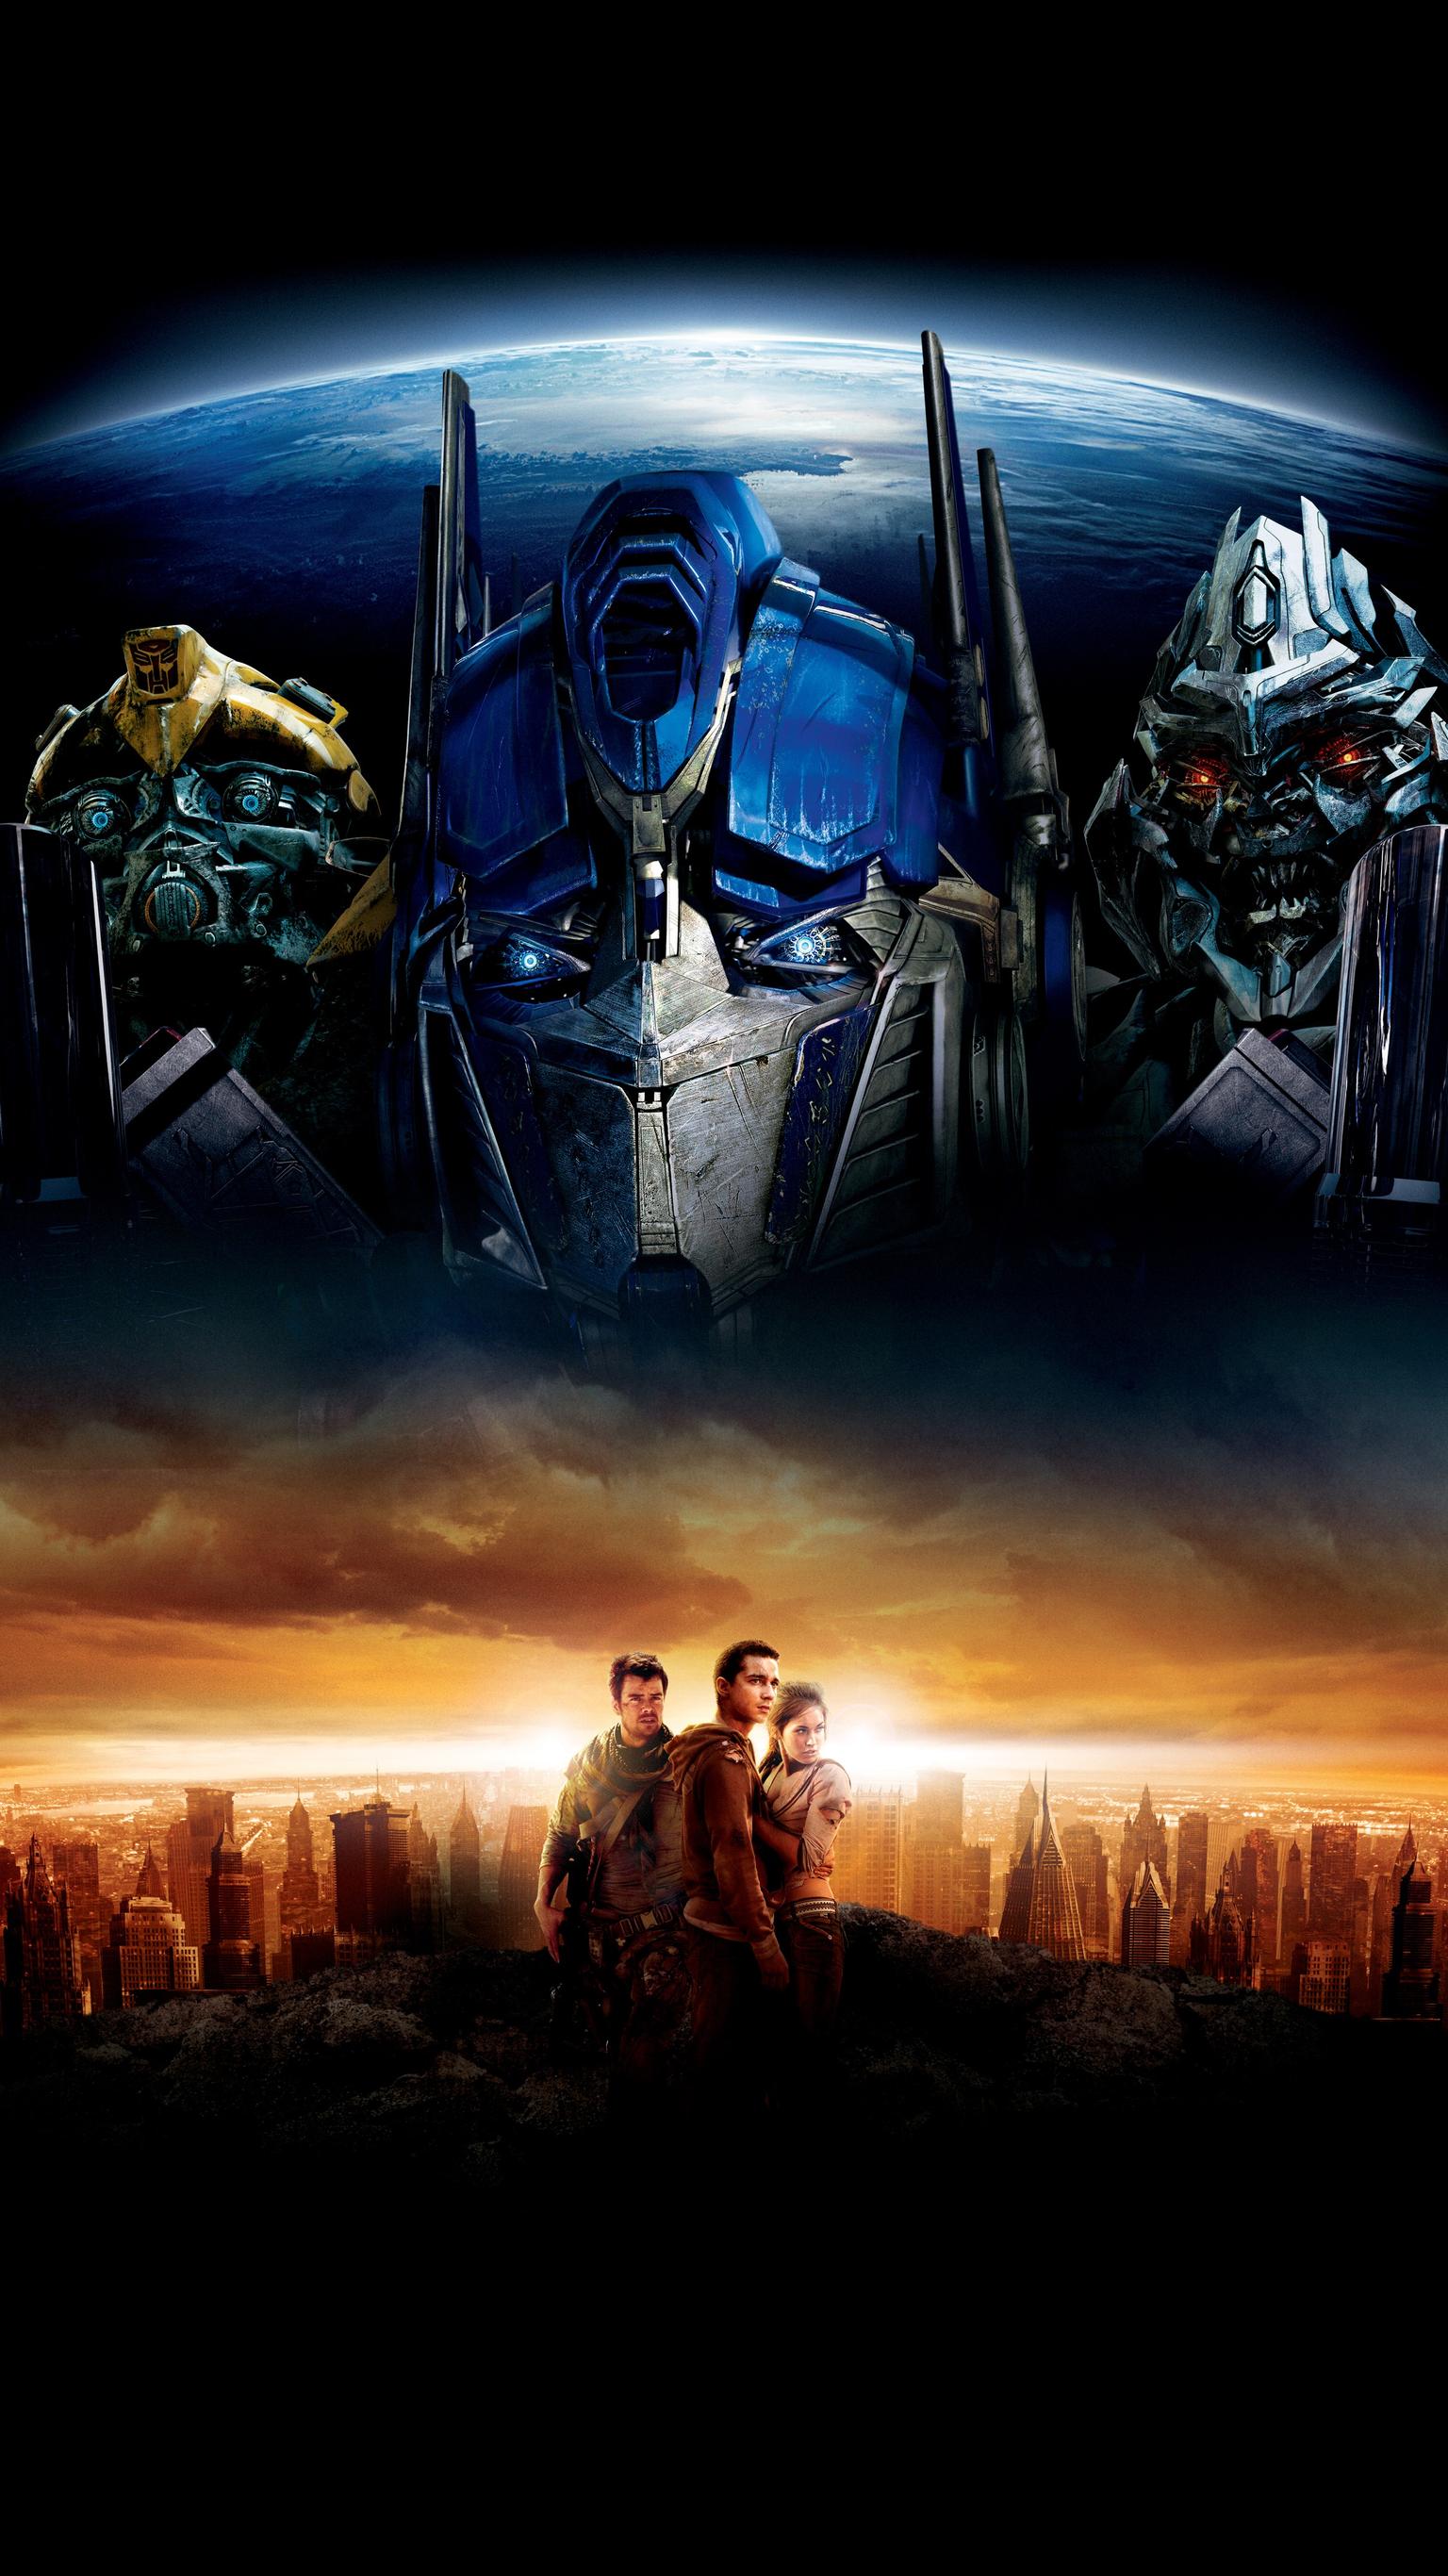 Fondos de pantalla de Transformers - FondosMil